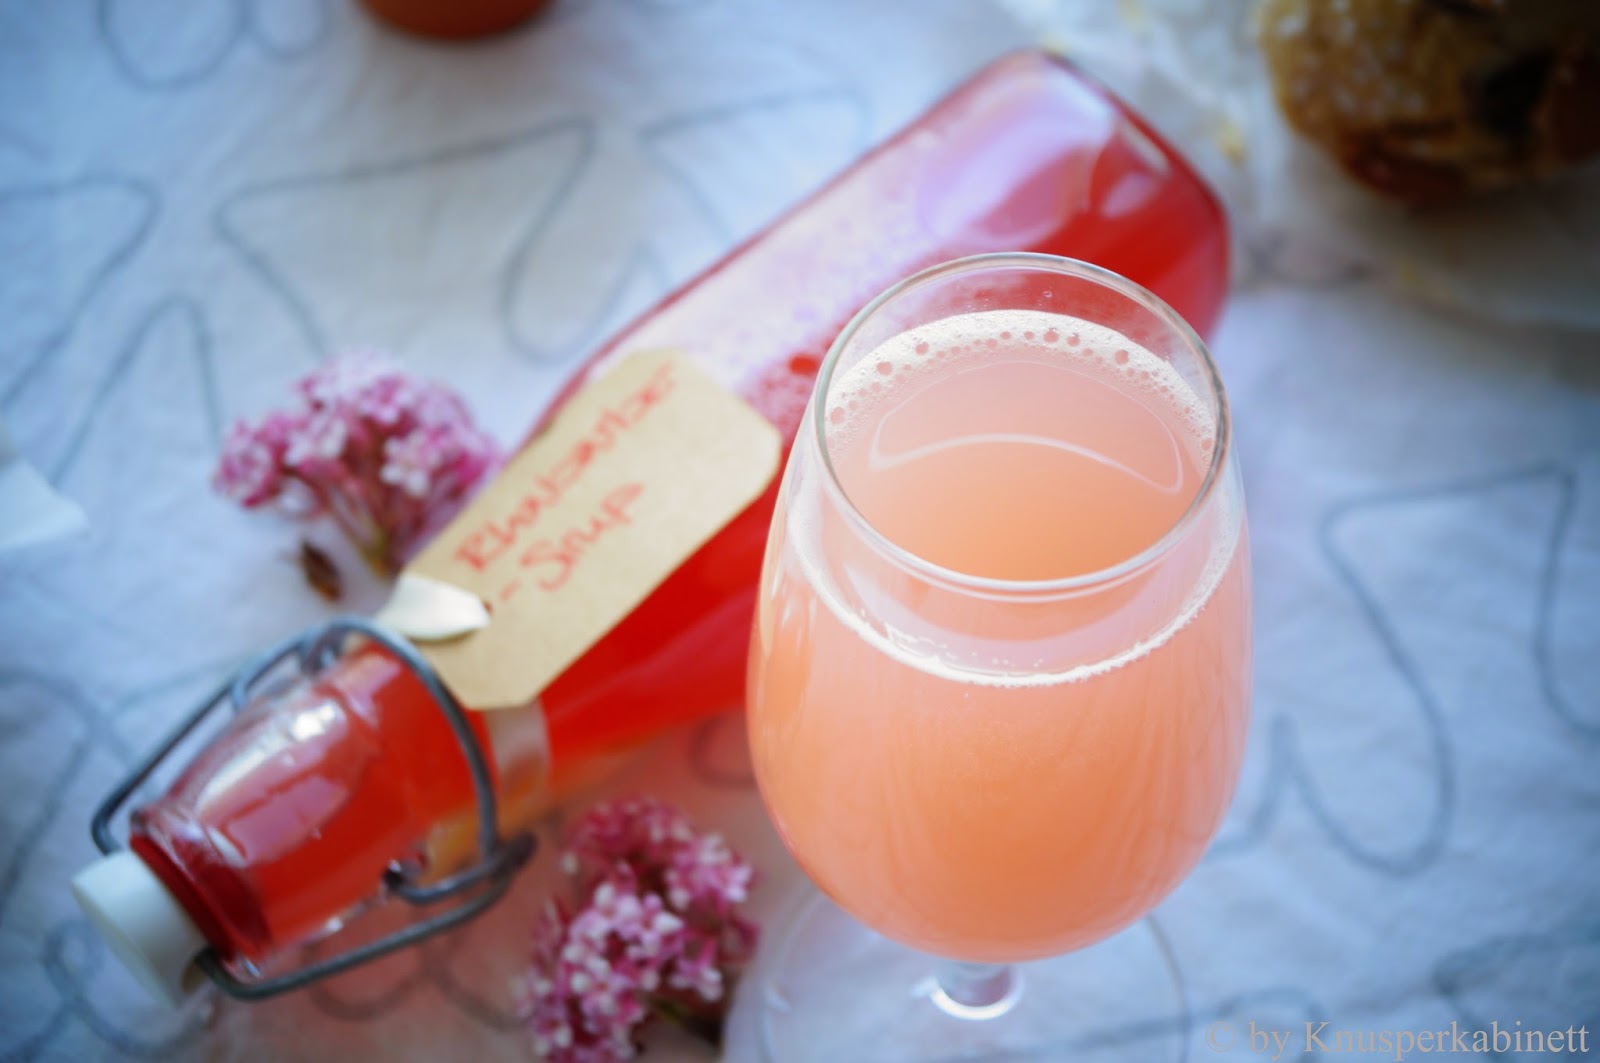 Knusperkabinett: Rhabarbersirup (Rhubarbie) mit Orangenblütenwasser